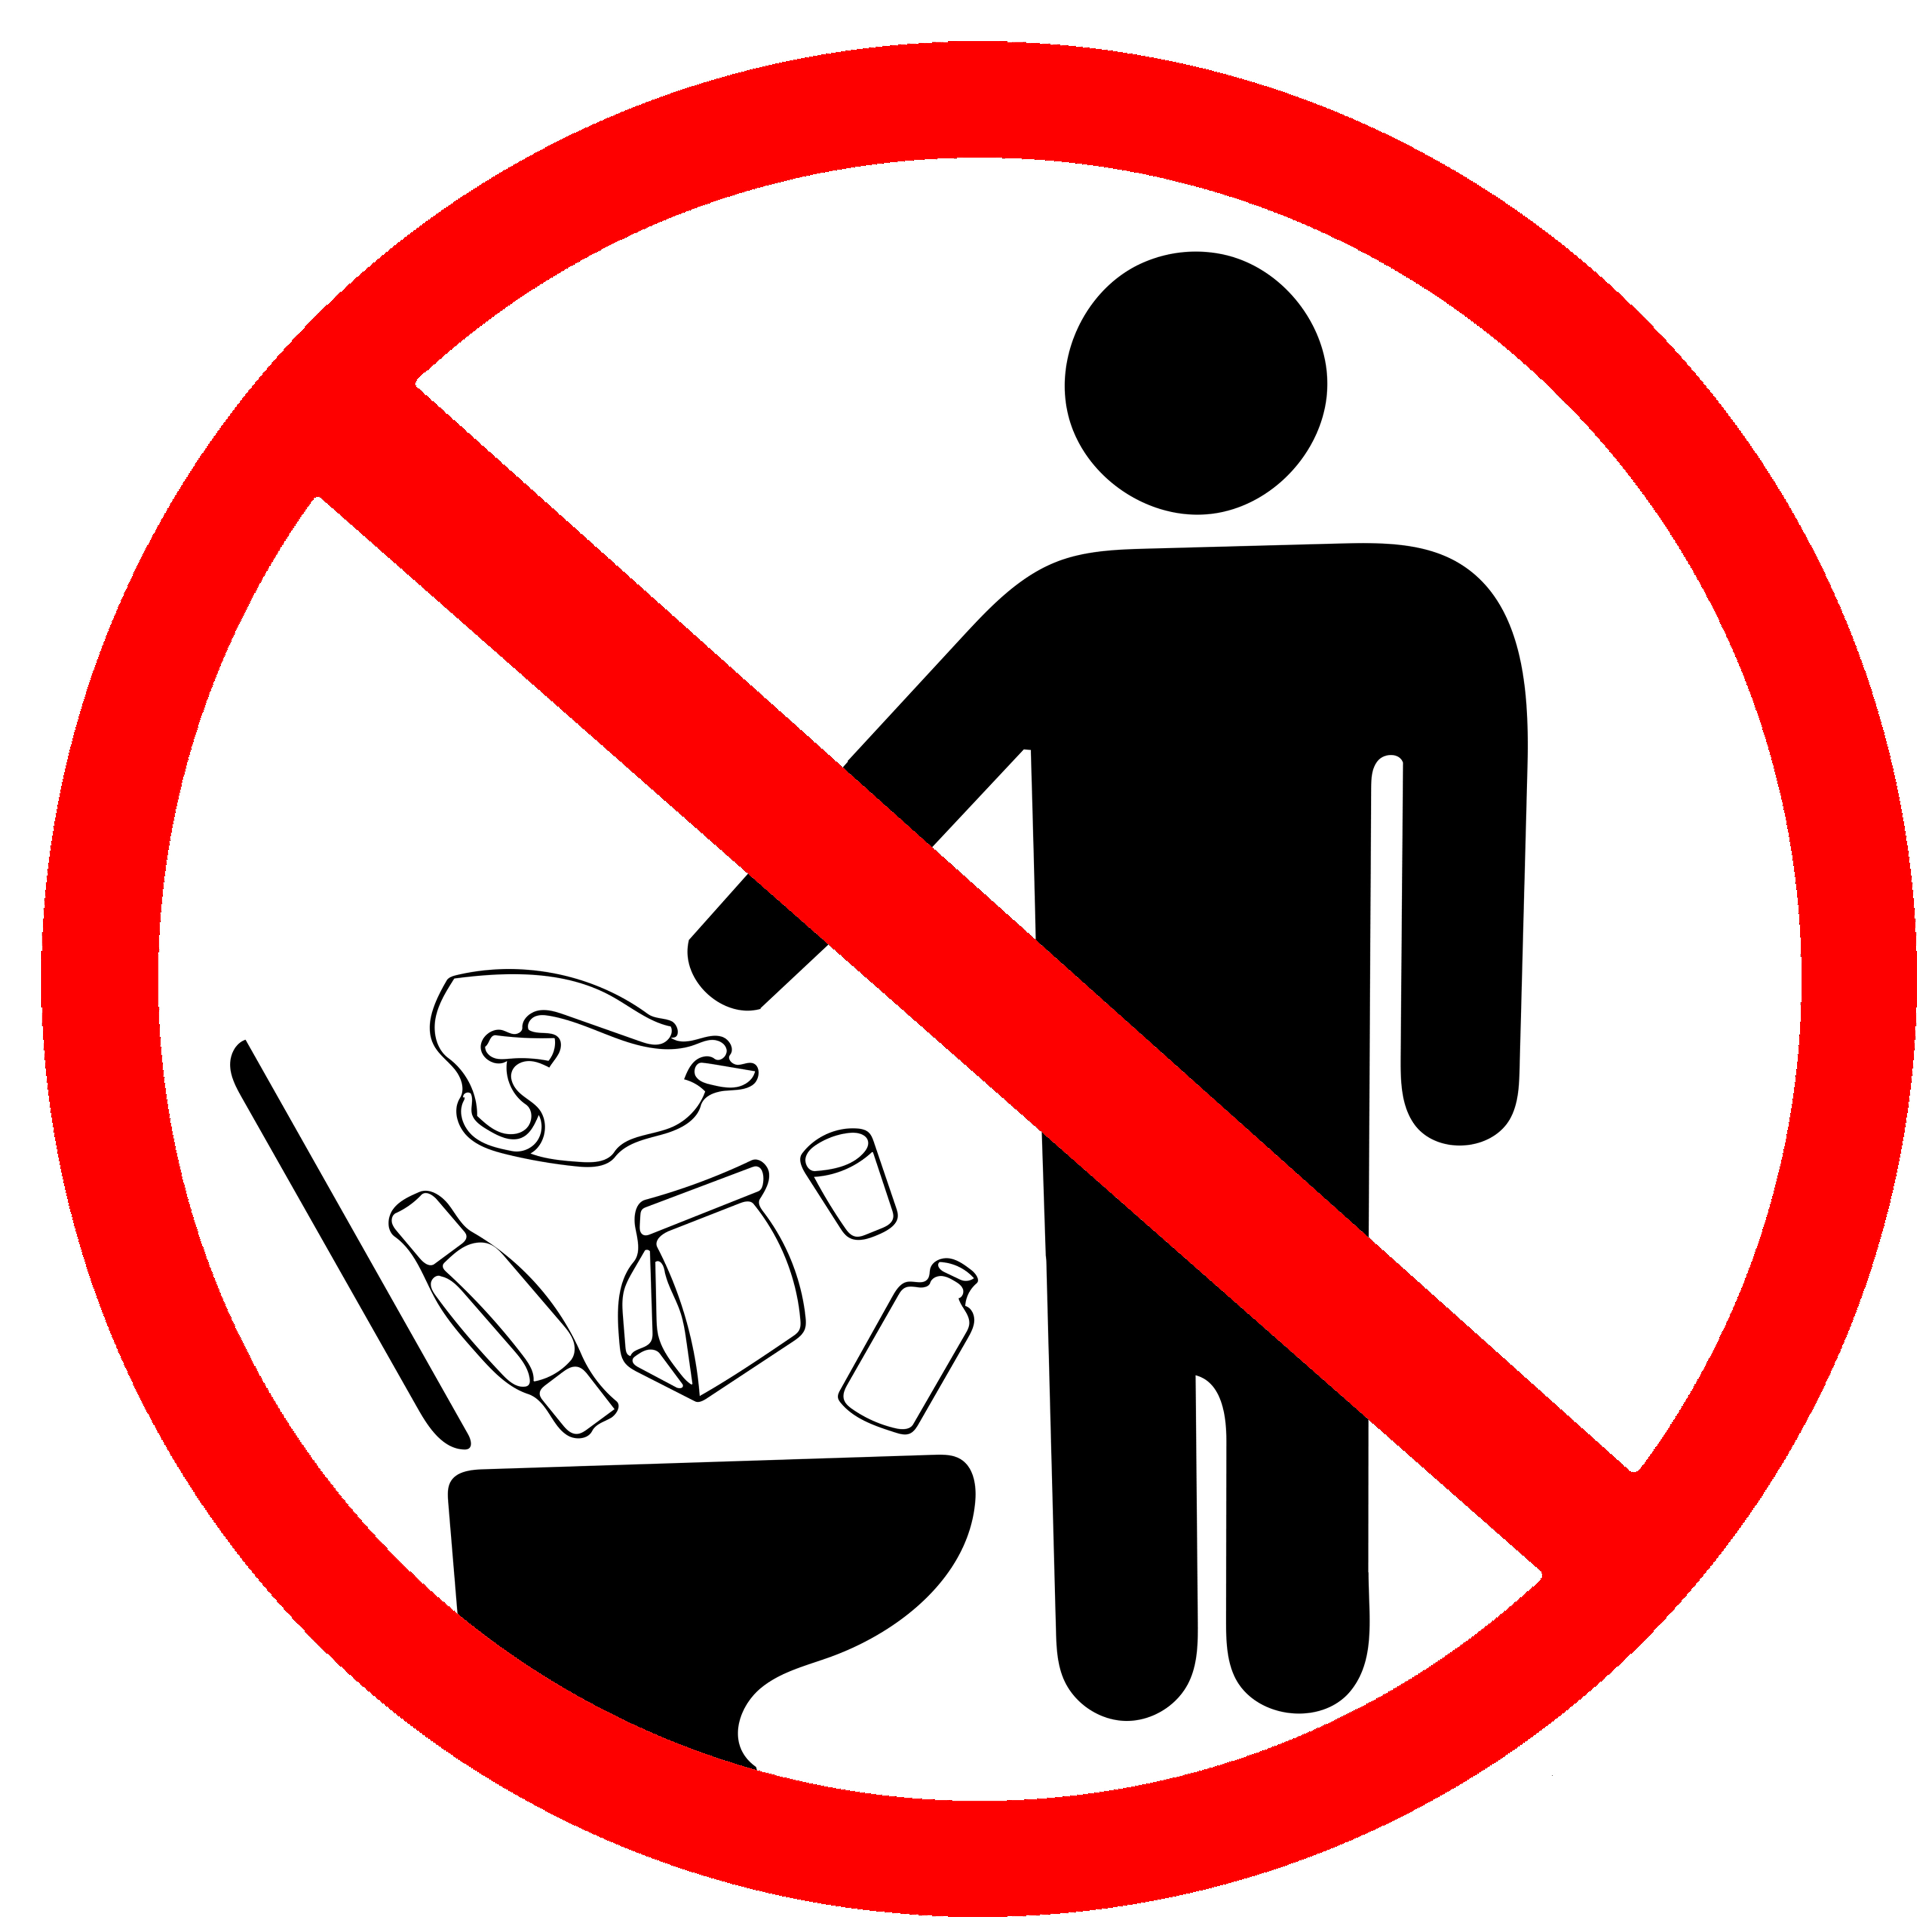 No trash in toilet sign.